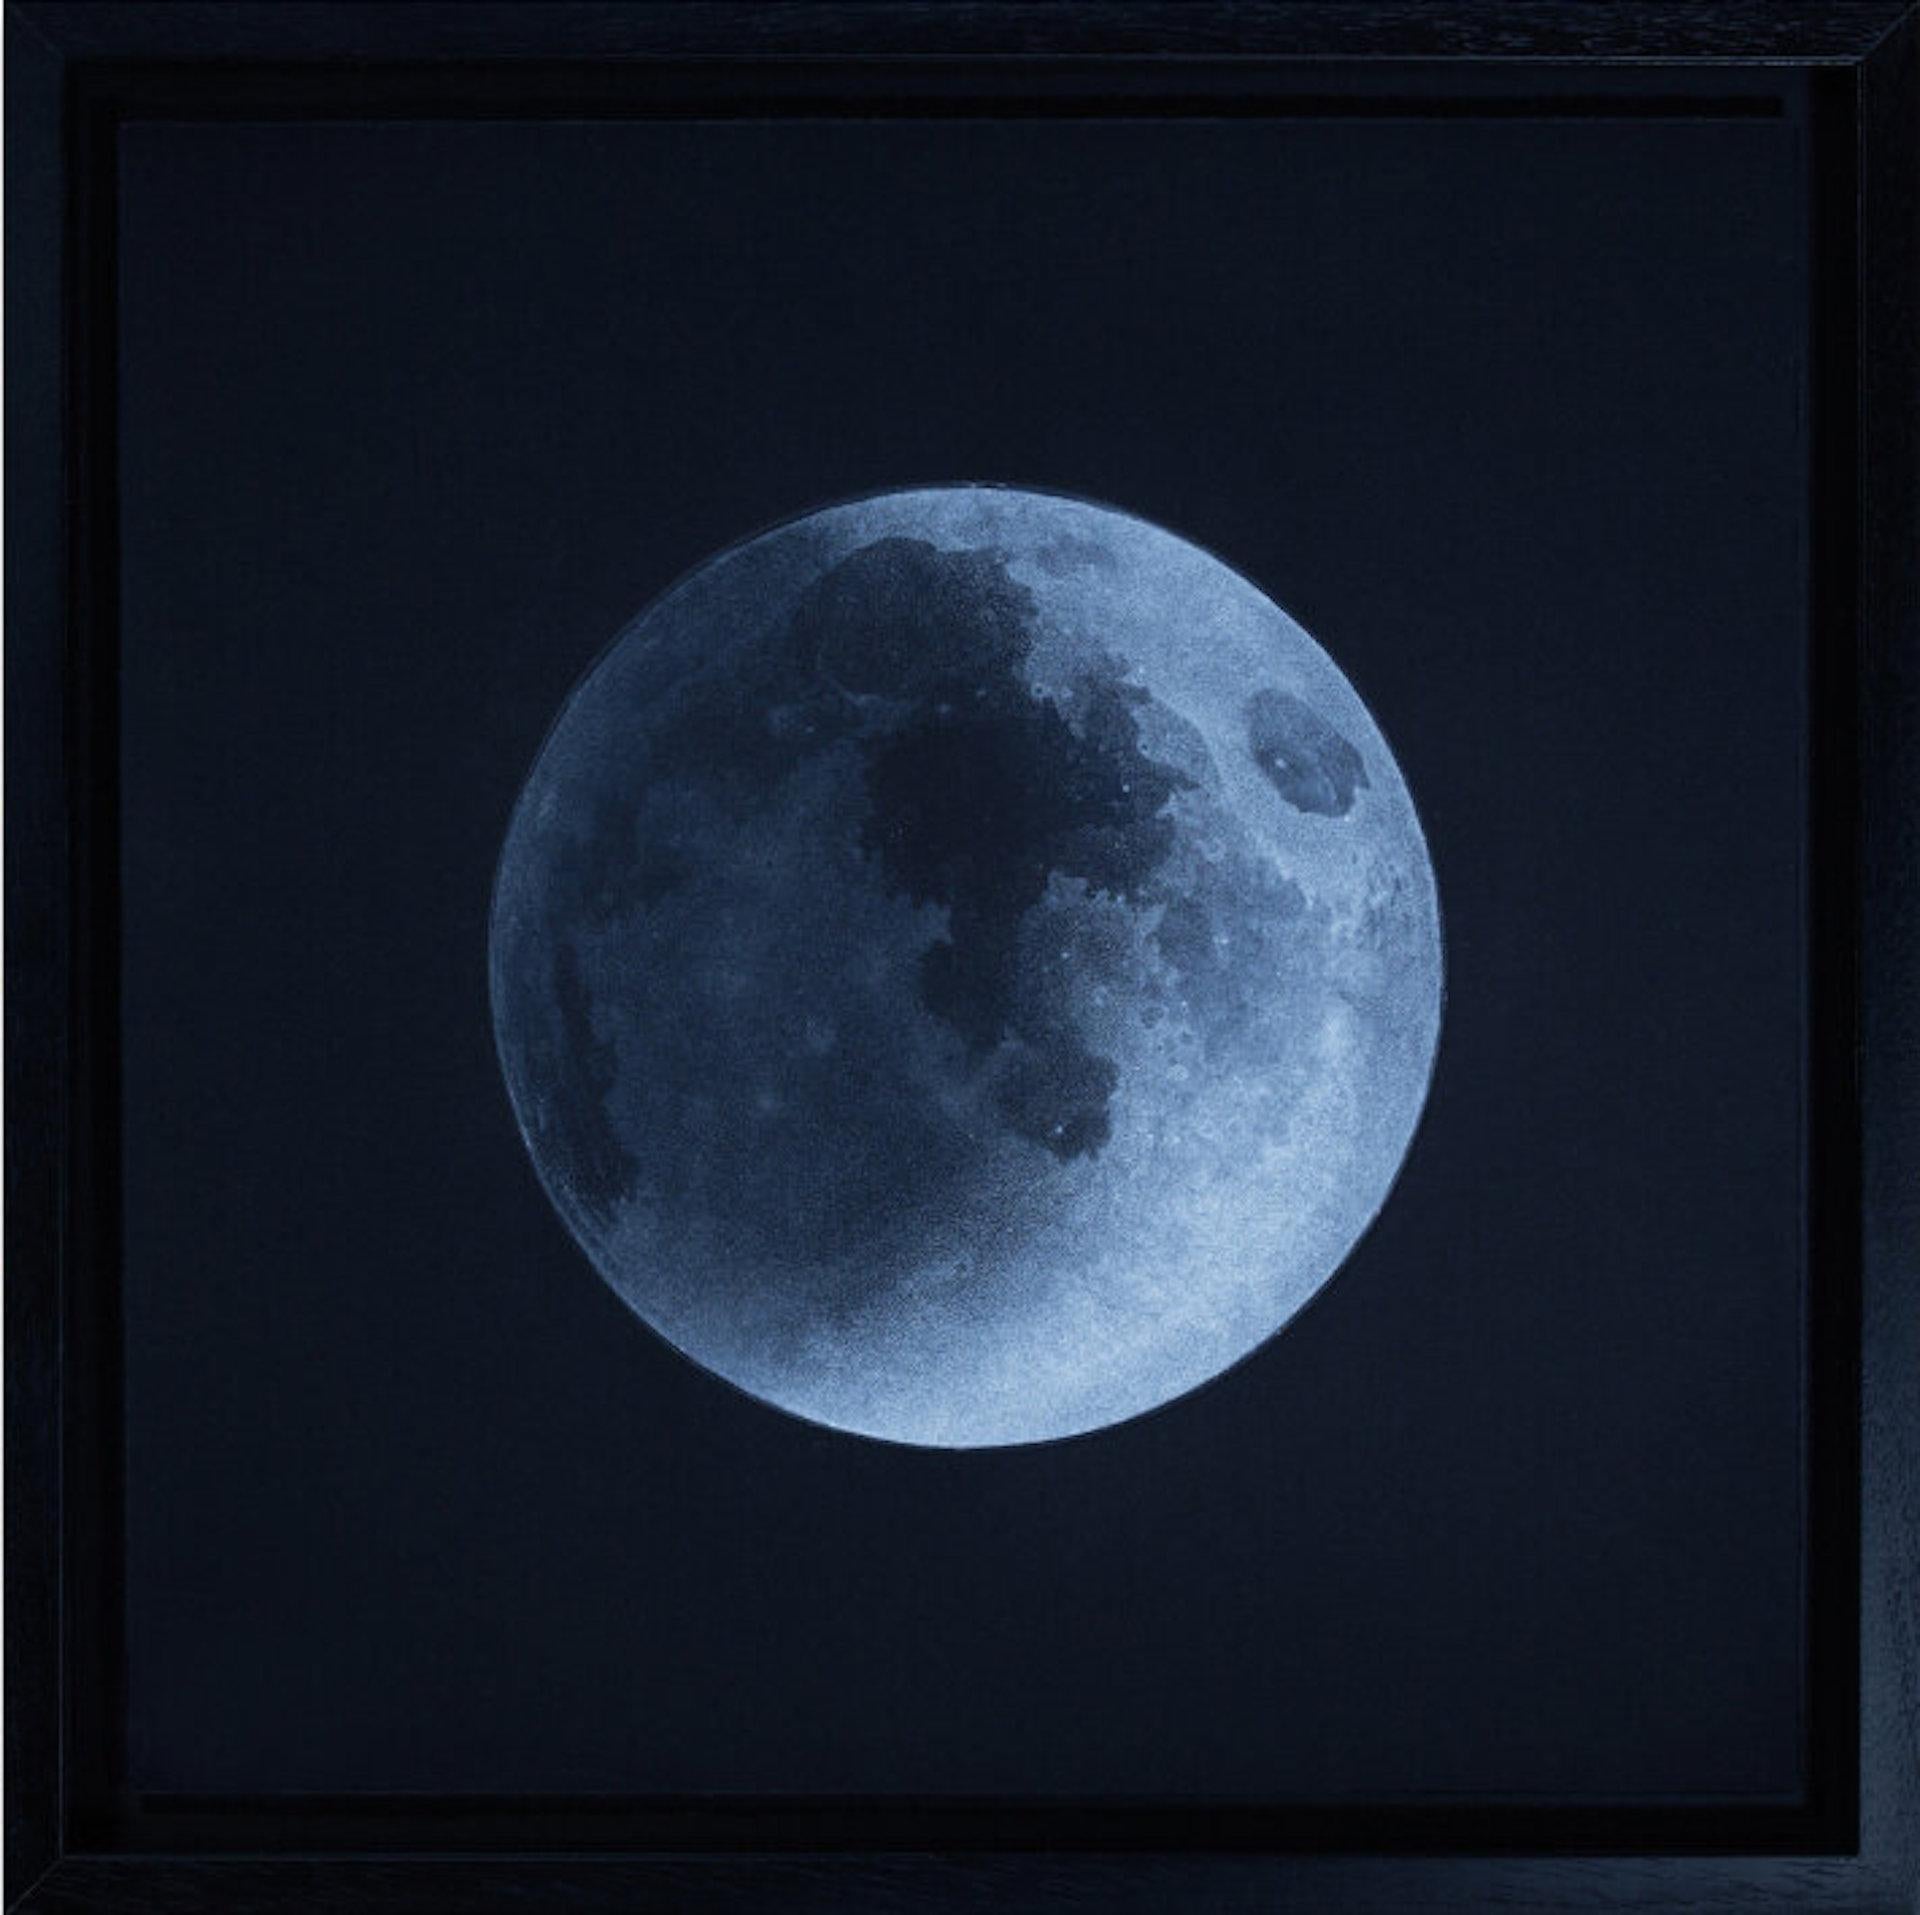 Waxing Crescent (The Moon Series), Guy Allen, Druck in limitierter Auflage, preiswert